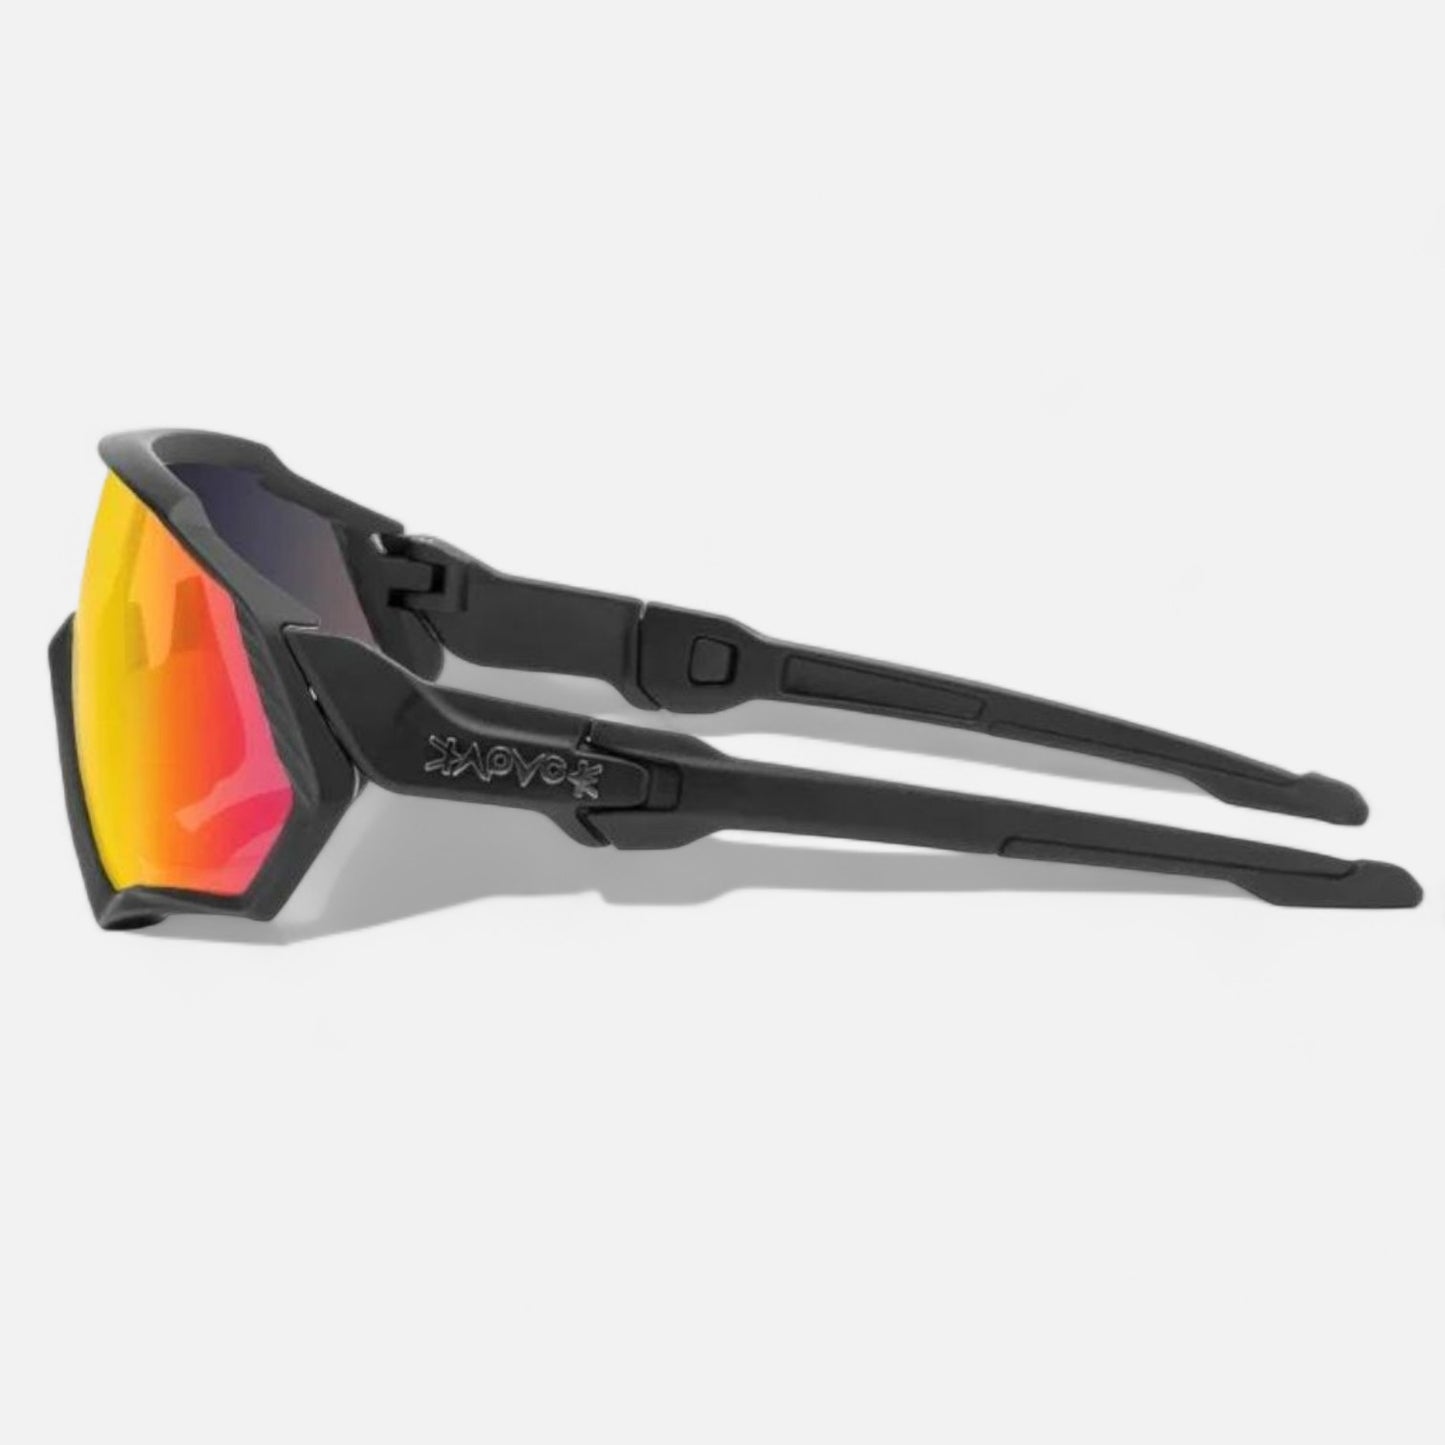 The Proteus Sport Sunglasses